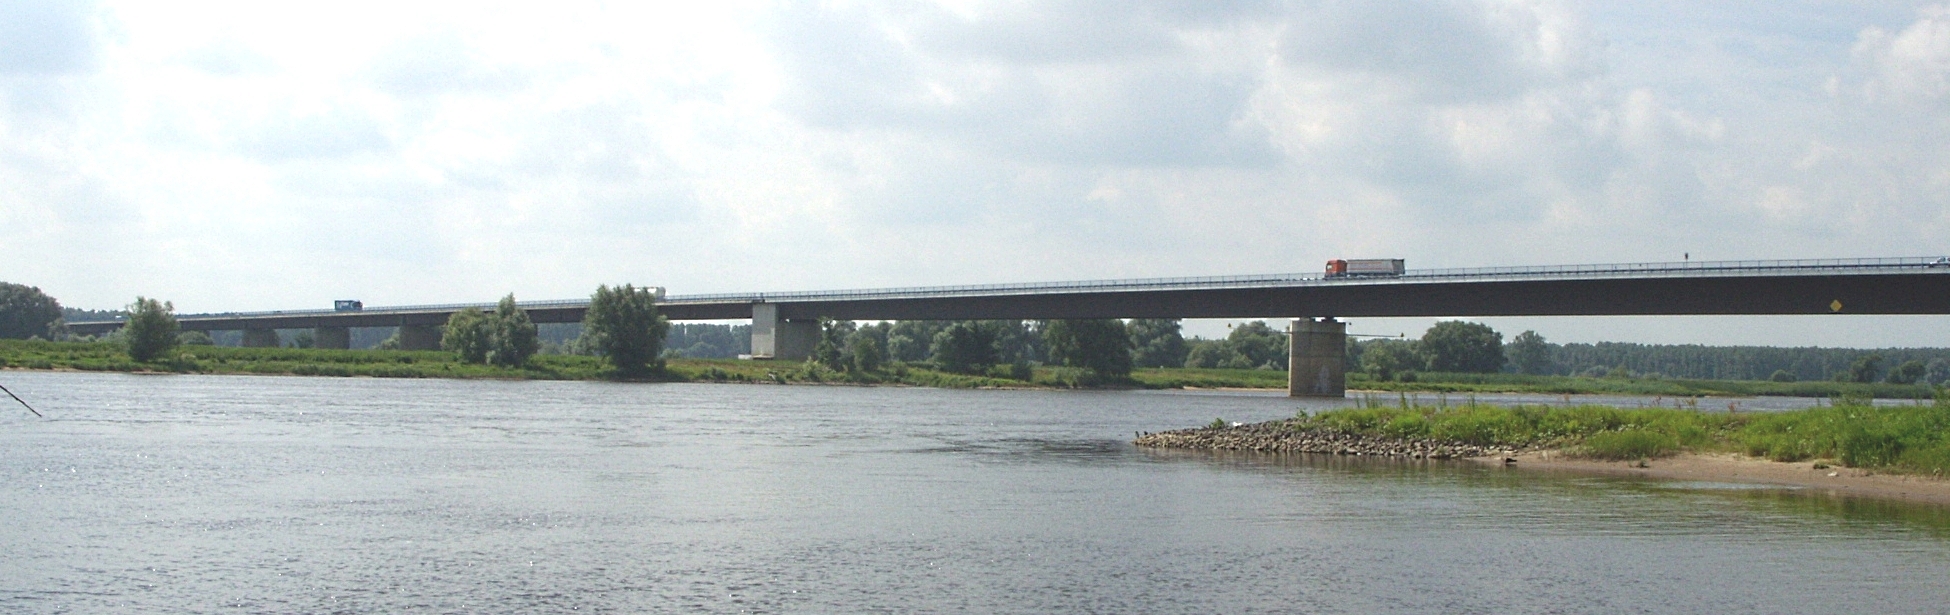 Elbebrücke bei Wittenberge - Quelle: Wikipedia